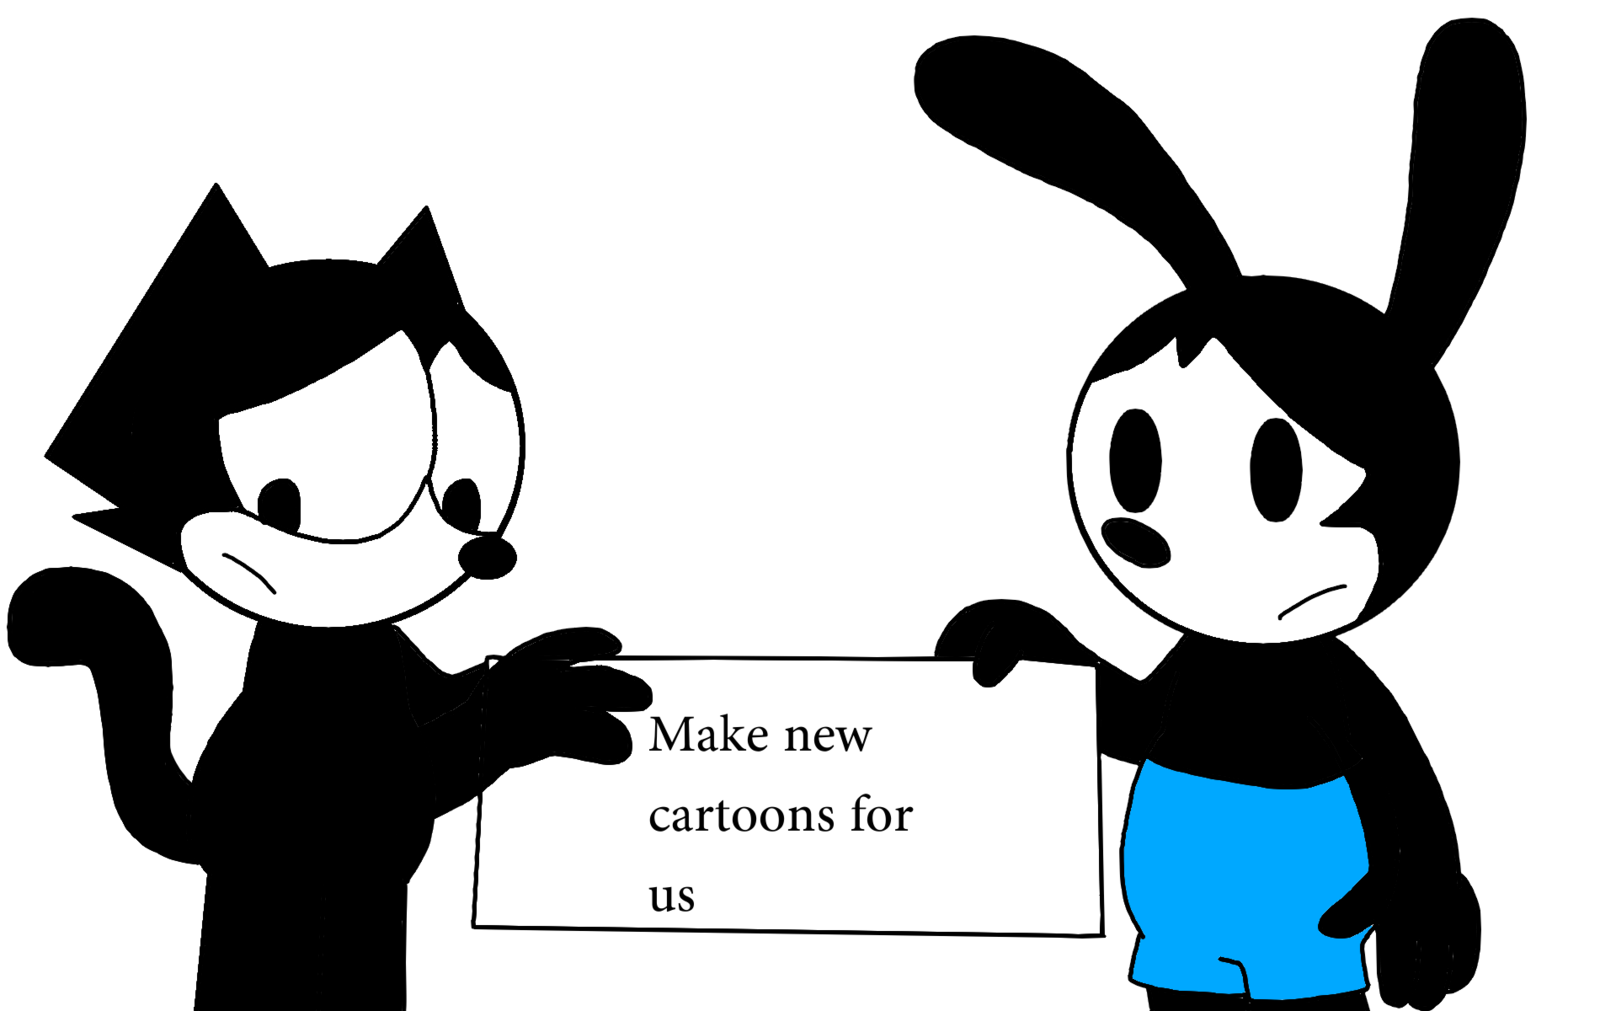 Felix and Oswald wants new cartoons